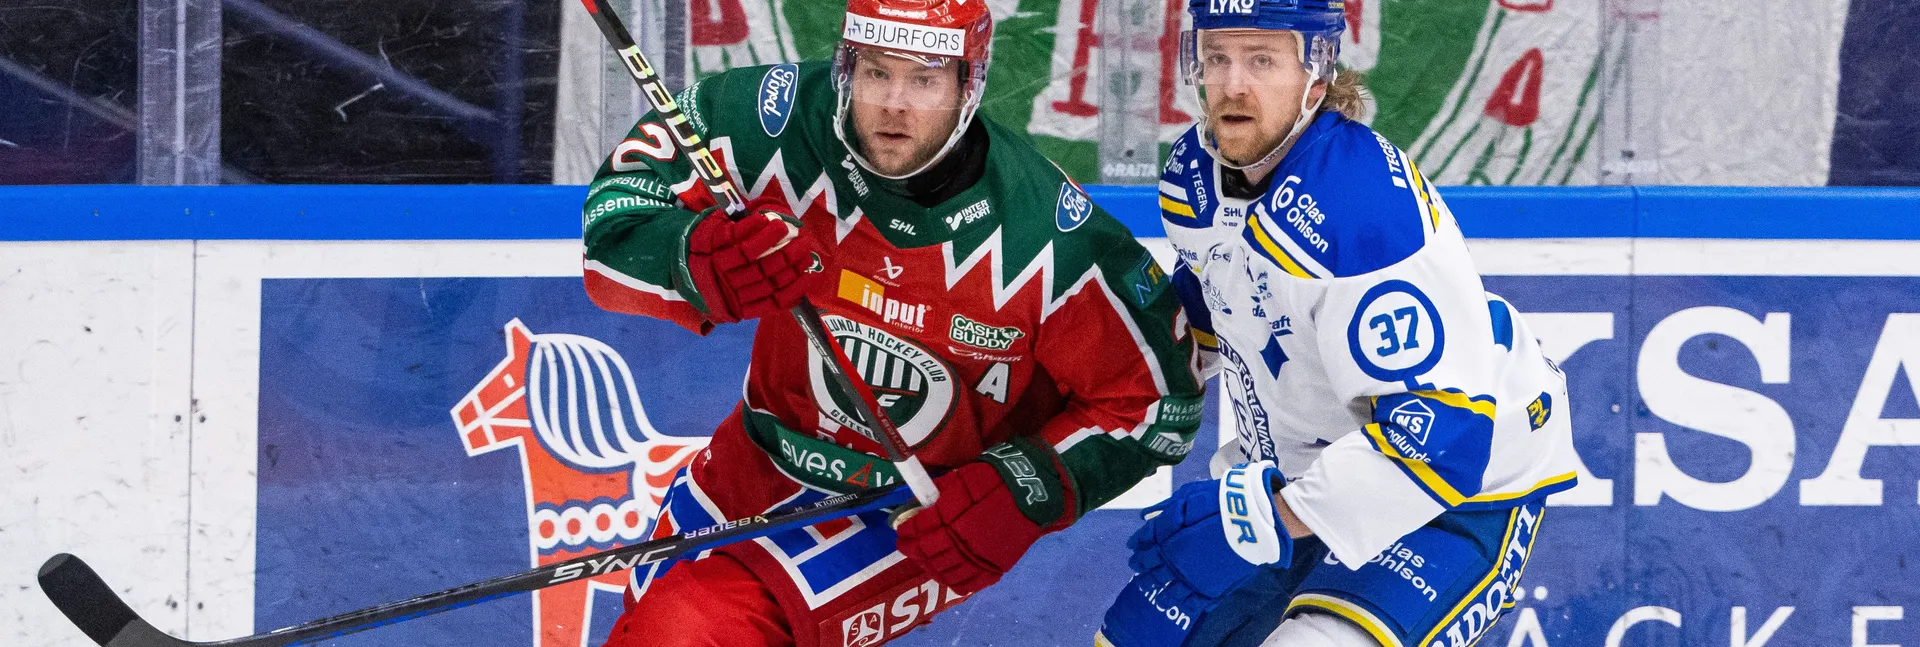 Ishockeymatch mellan Frölunda och Leksand i SHL